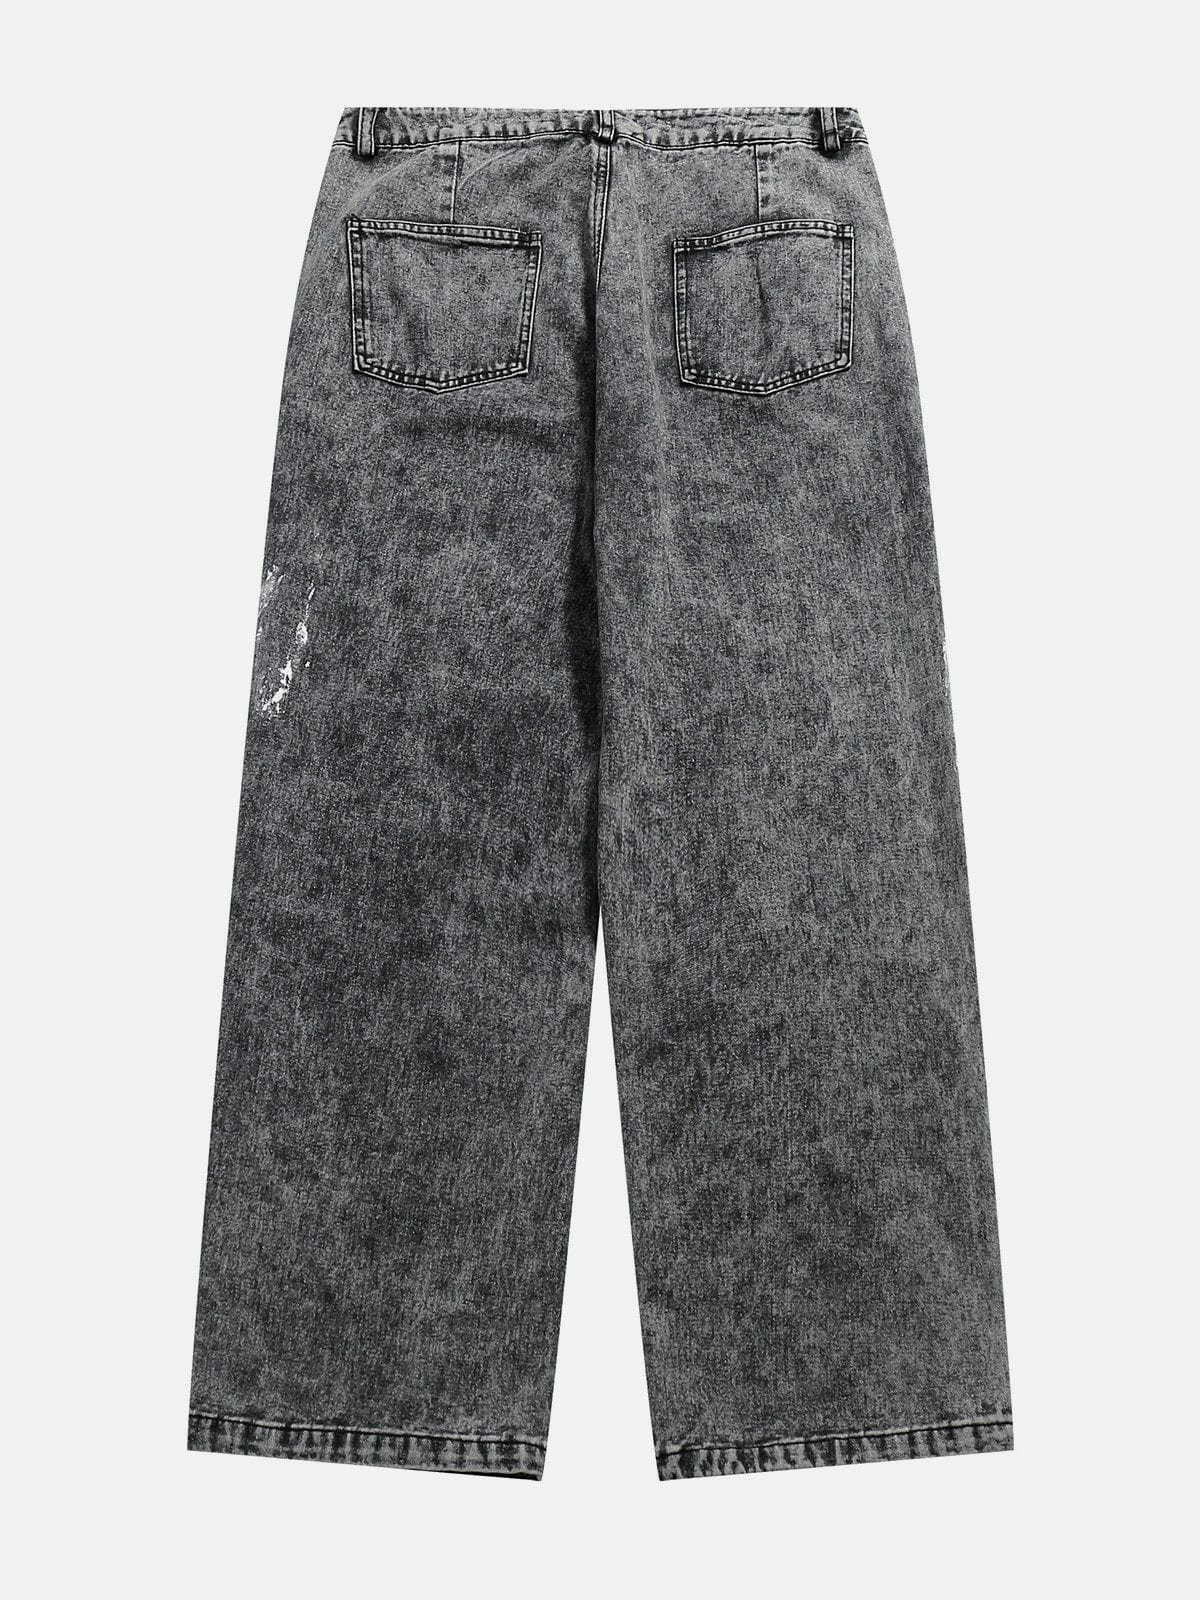 patchwork splash denim jeans edgy streetwear essential 6750